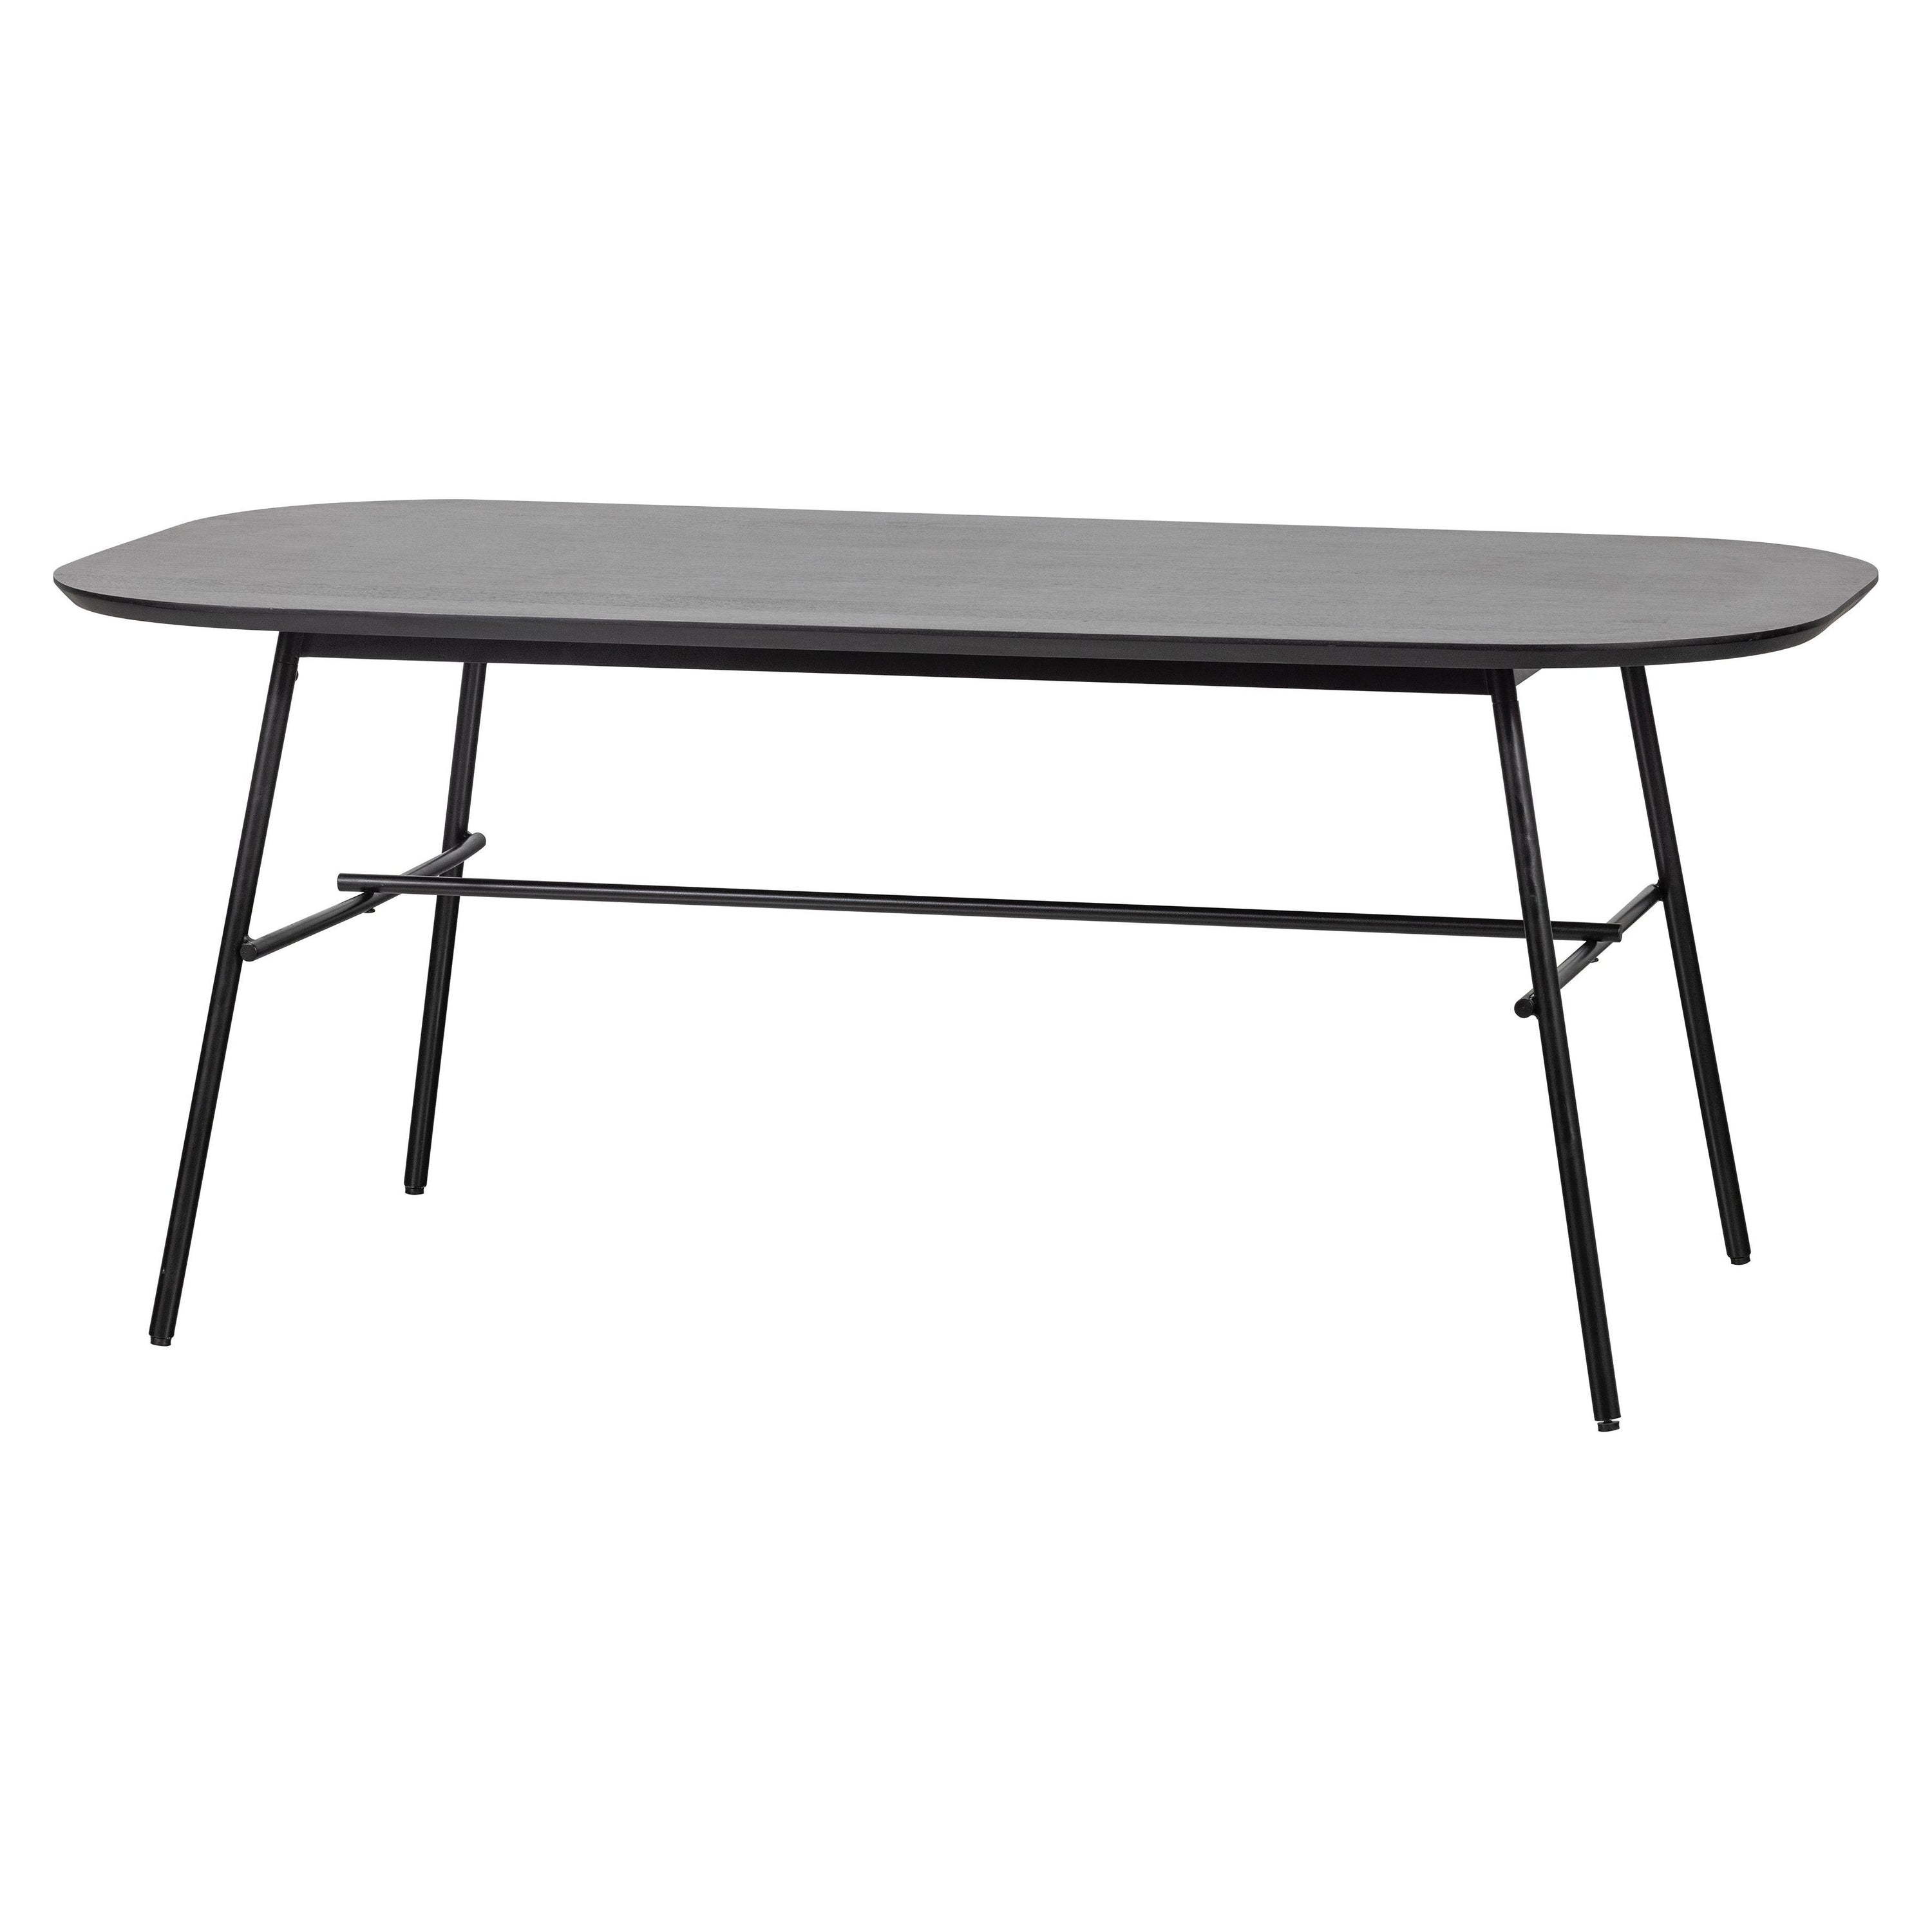 "ELEGANCE" valgomojo stalas, juoda spalva, mango mediena